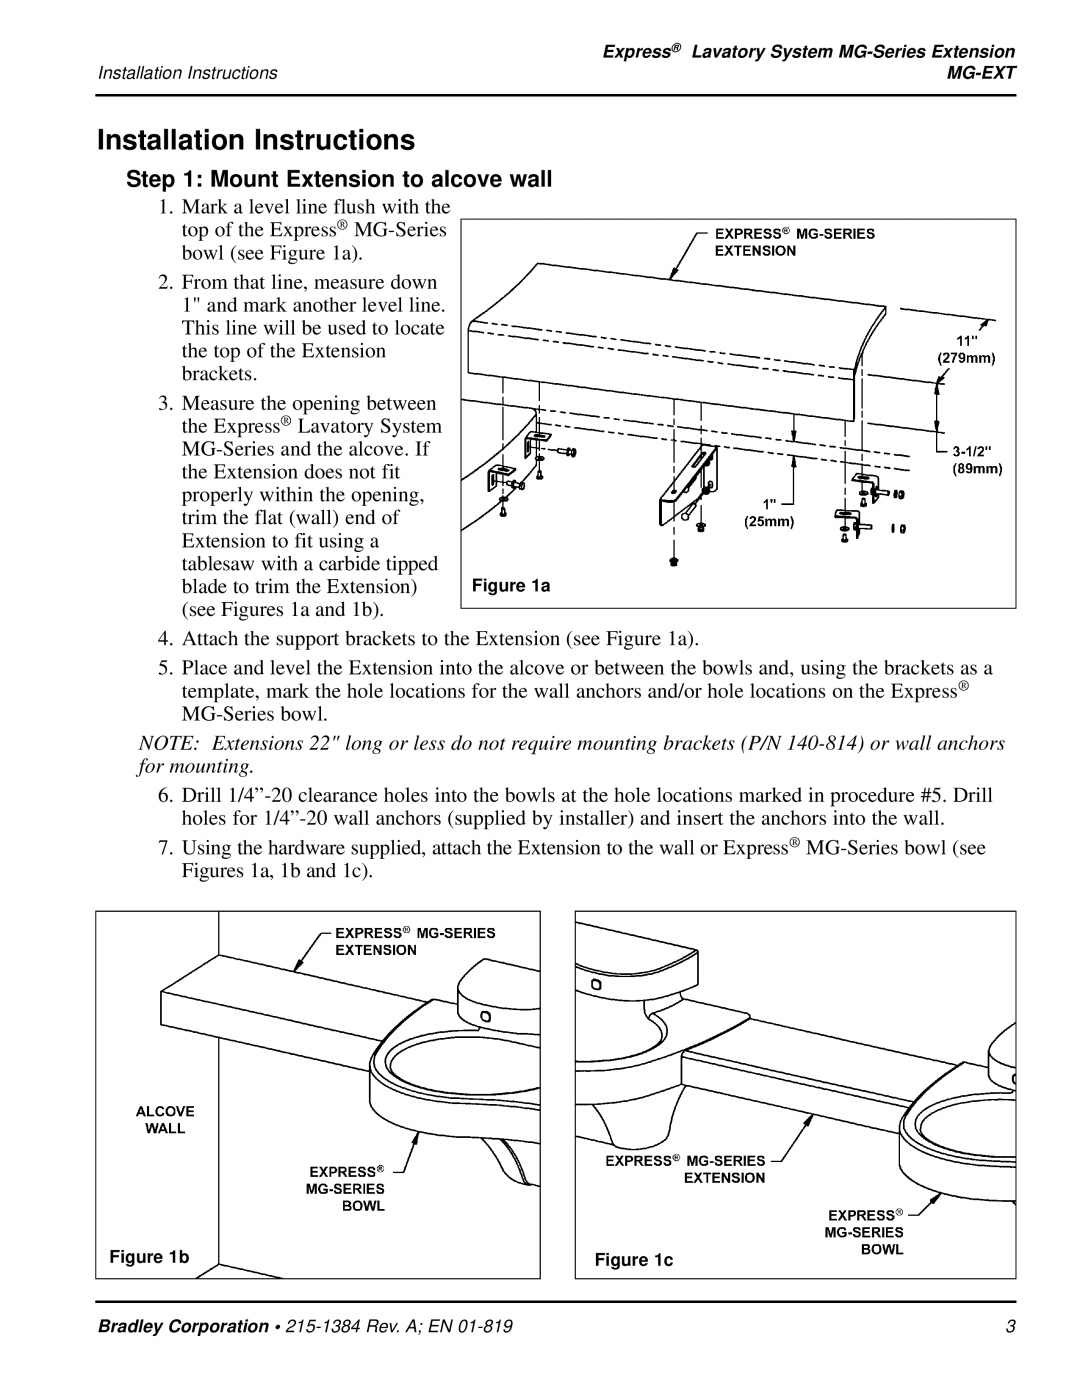 Bradley Smoker MG-EXT installation instructions Installation Instructions, Mount Extension to alcove wall 